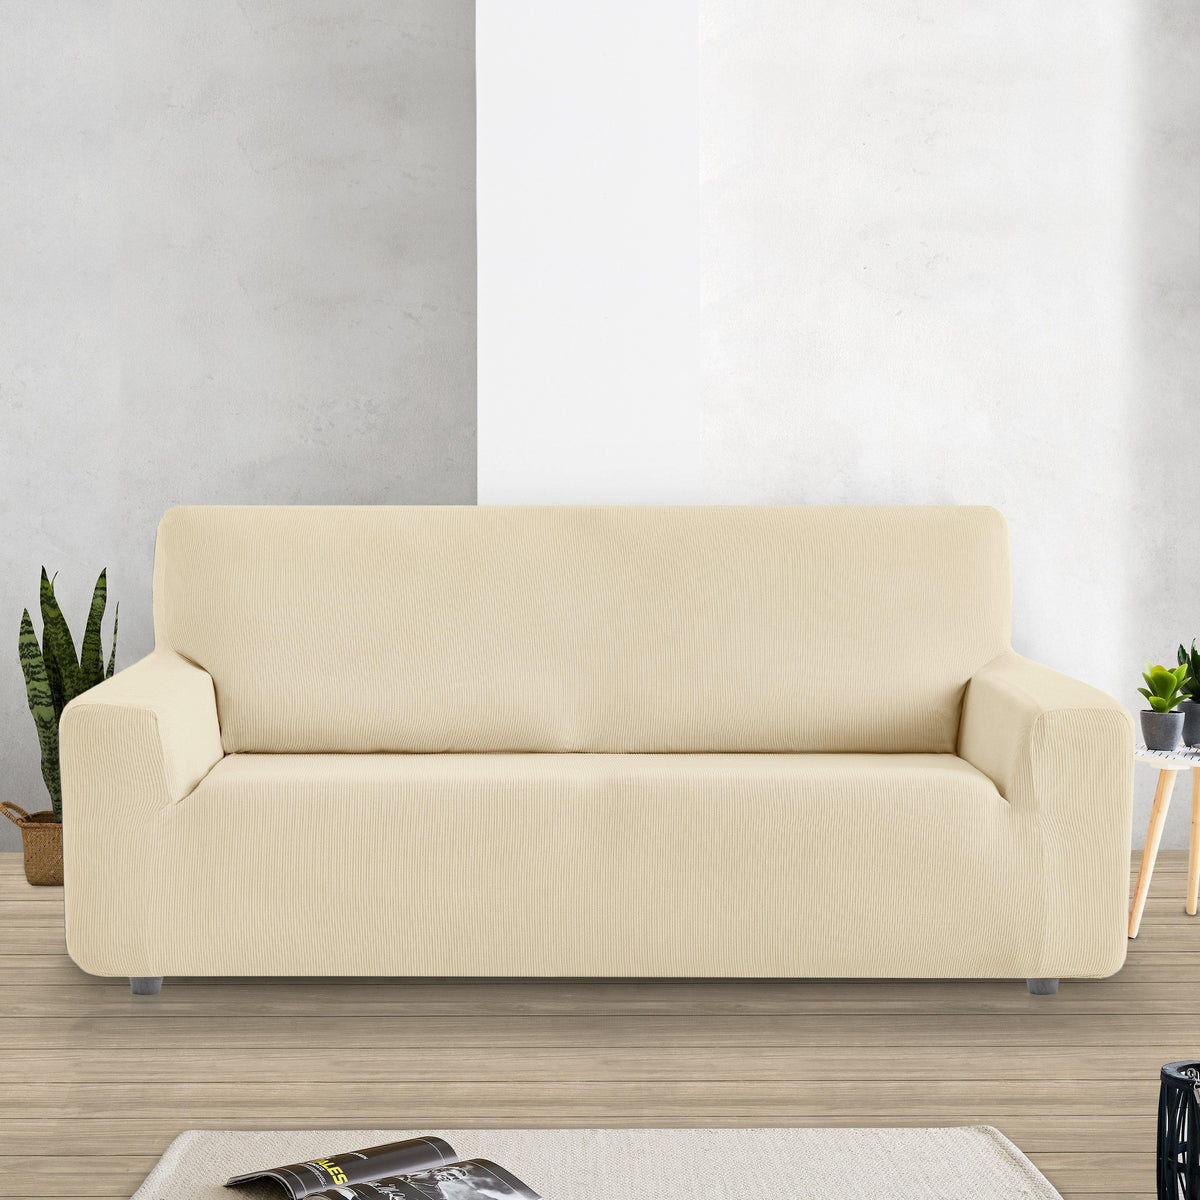 Funda Couch Cover para Chaise Longue - Sofás Valencia